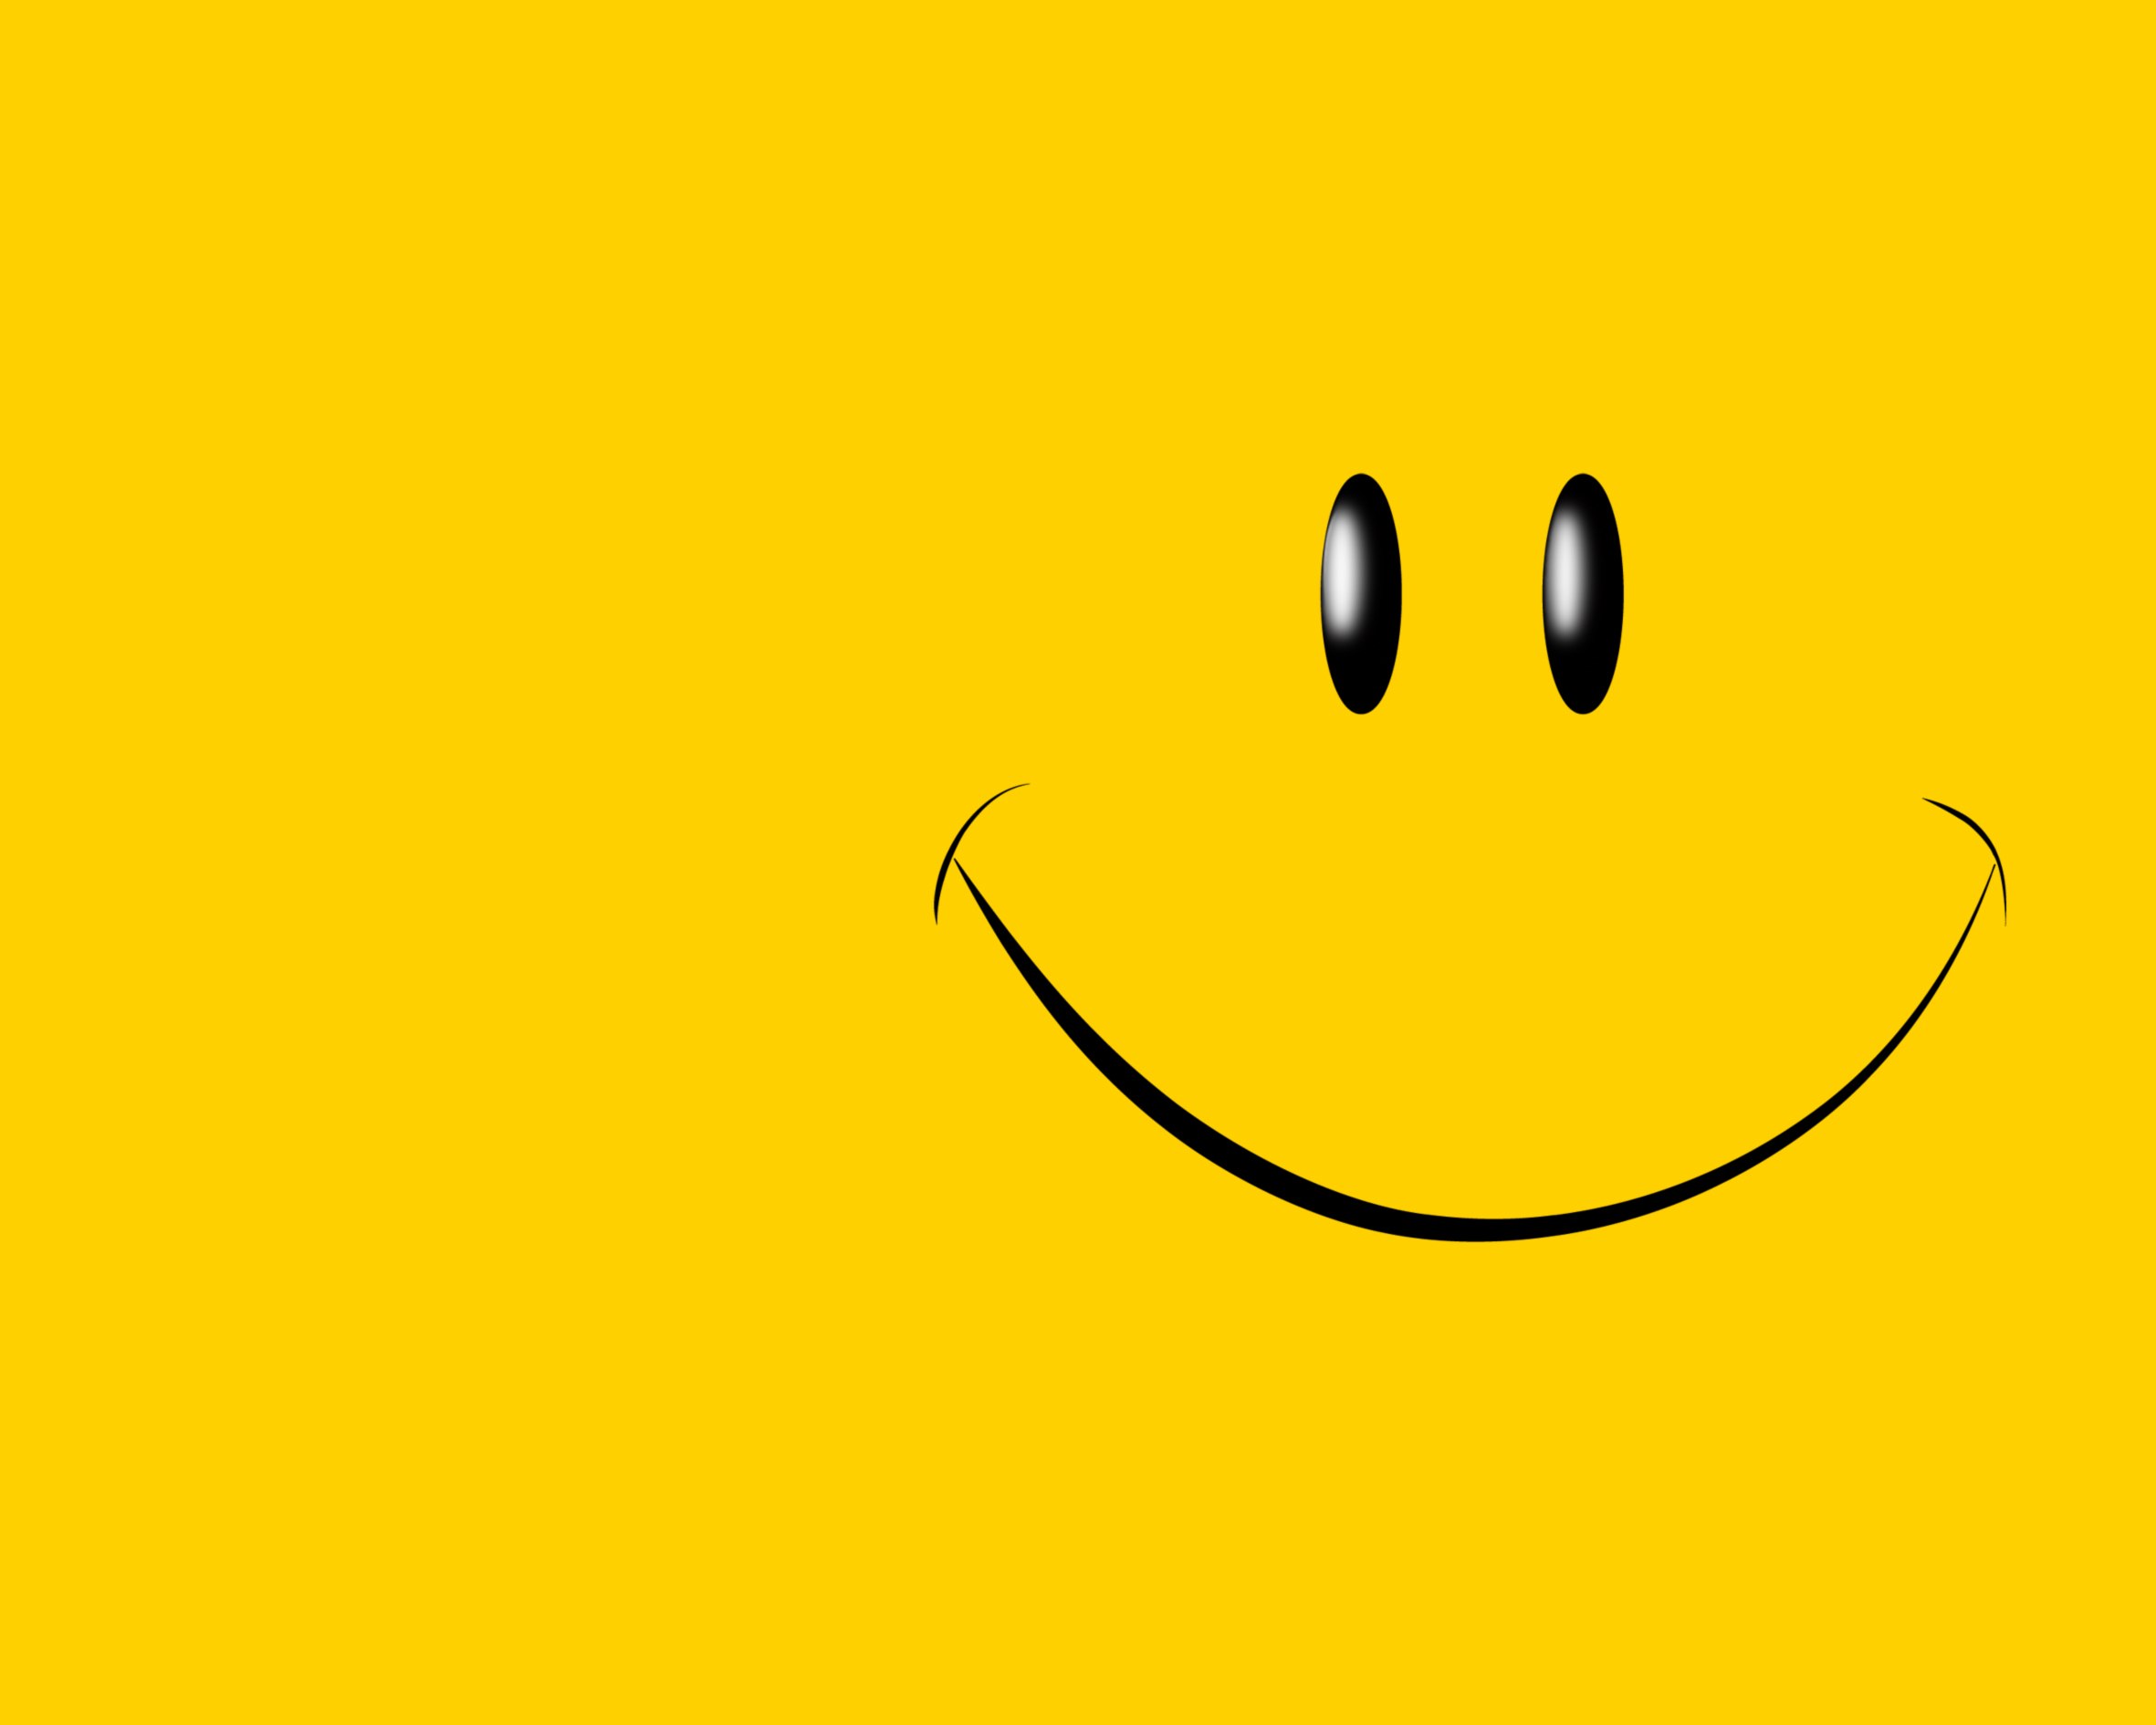 Фон смайлики улыбки. Смайлик на желтом фоне. Улыбка на желтом фоне. Улыбающийся смайлик. Смайлик улыбка.